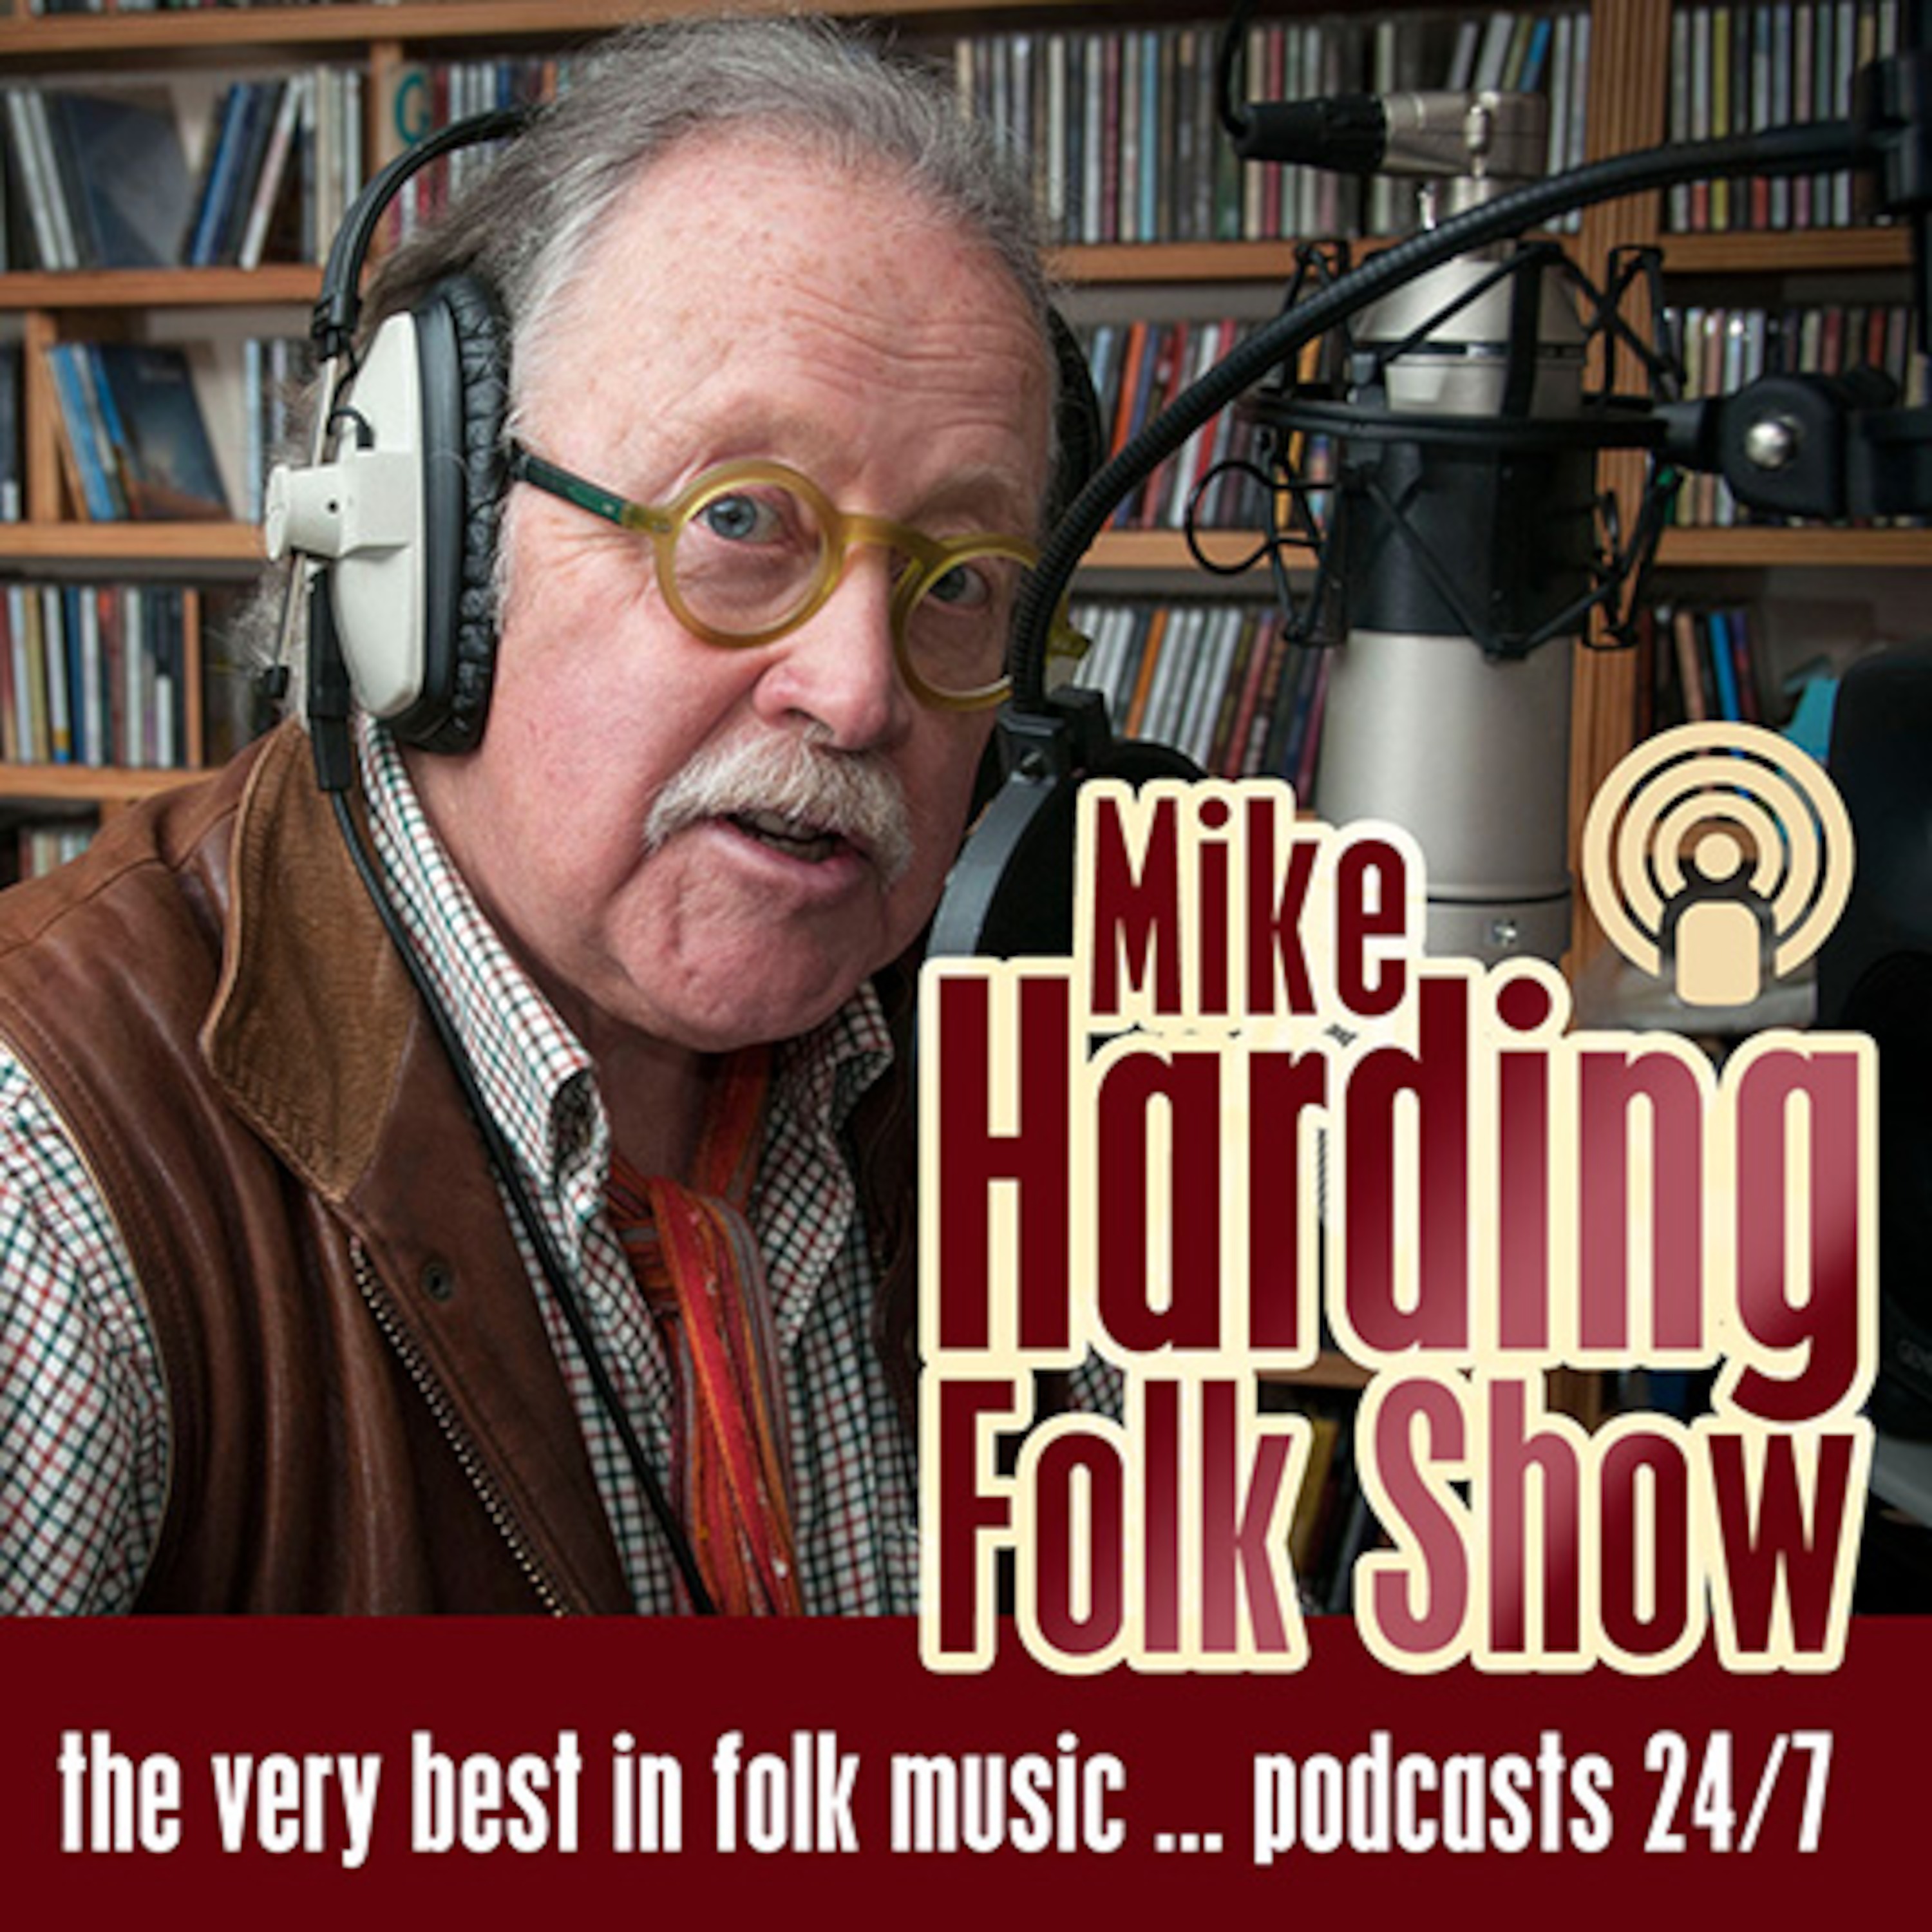 Mike Harding Folk Show 252